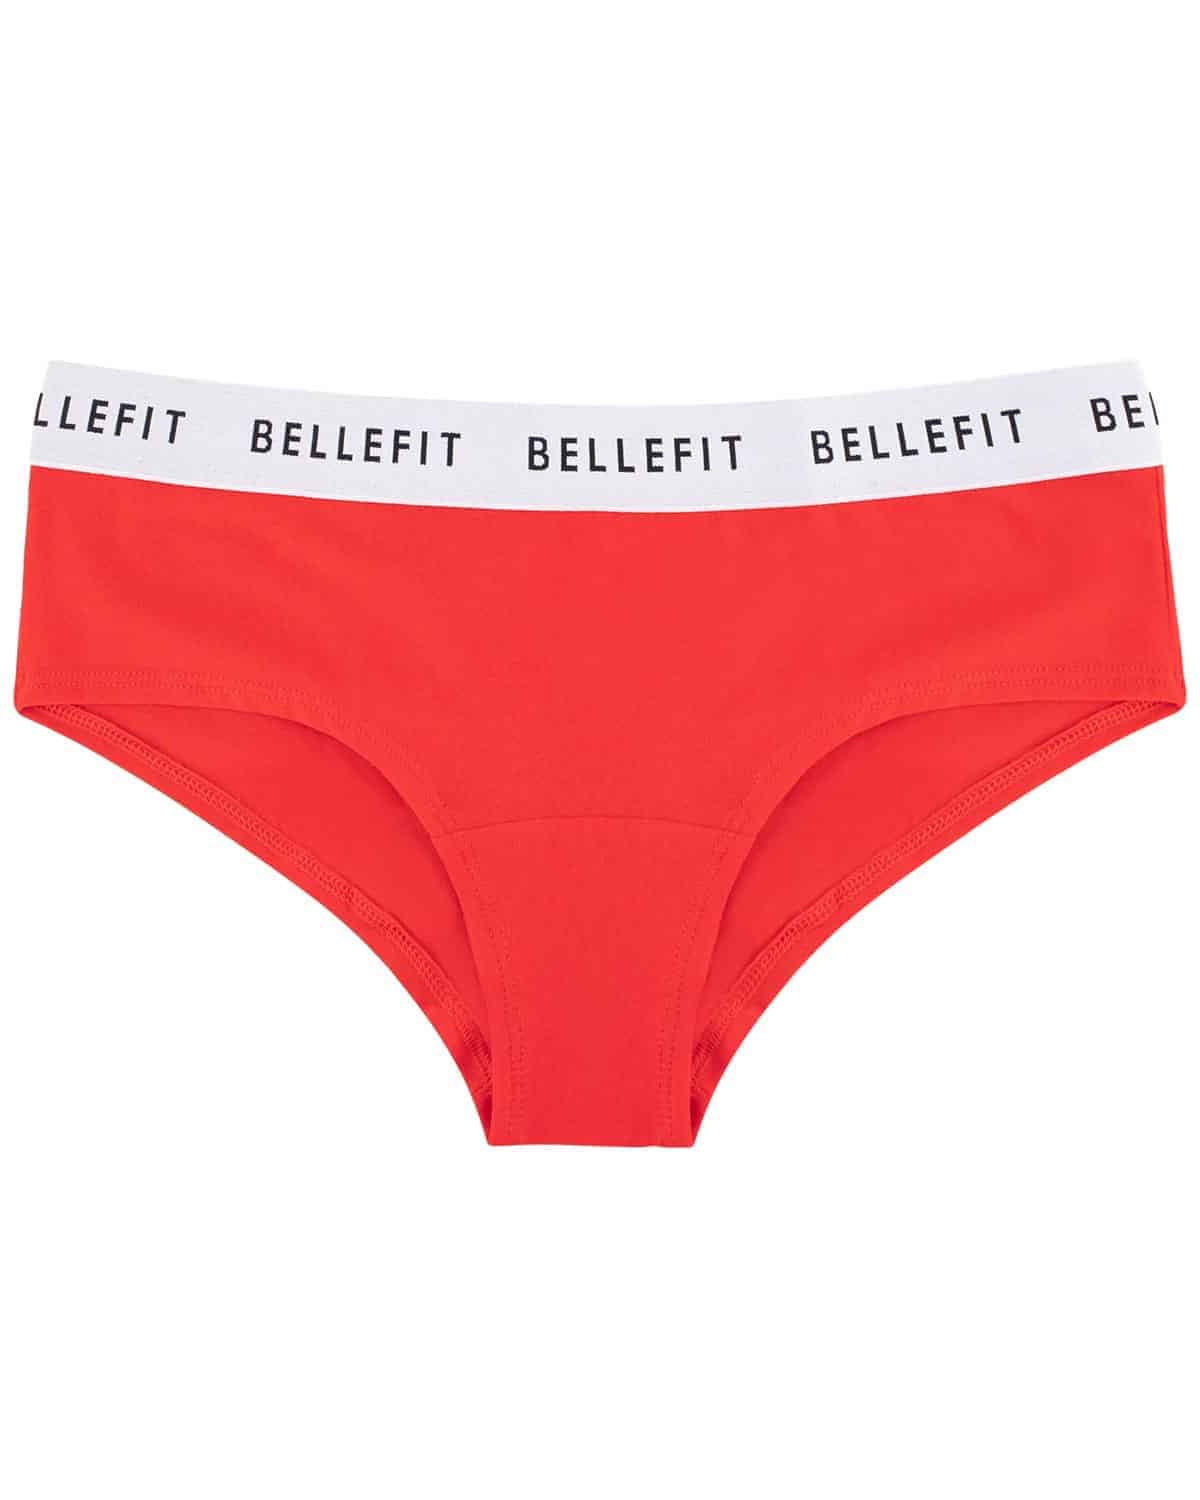 Bellefit Womens Cheeky Cotton Underwear Panties for Women